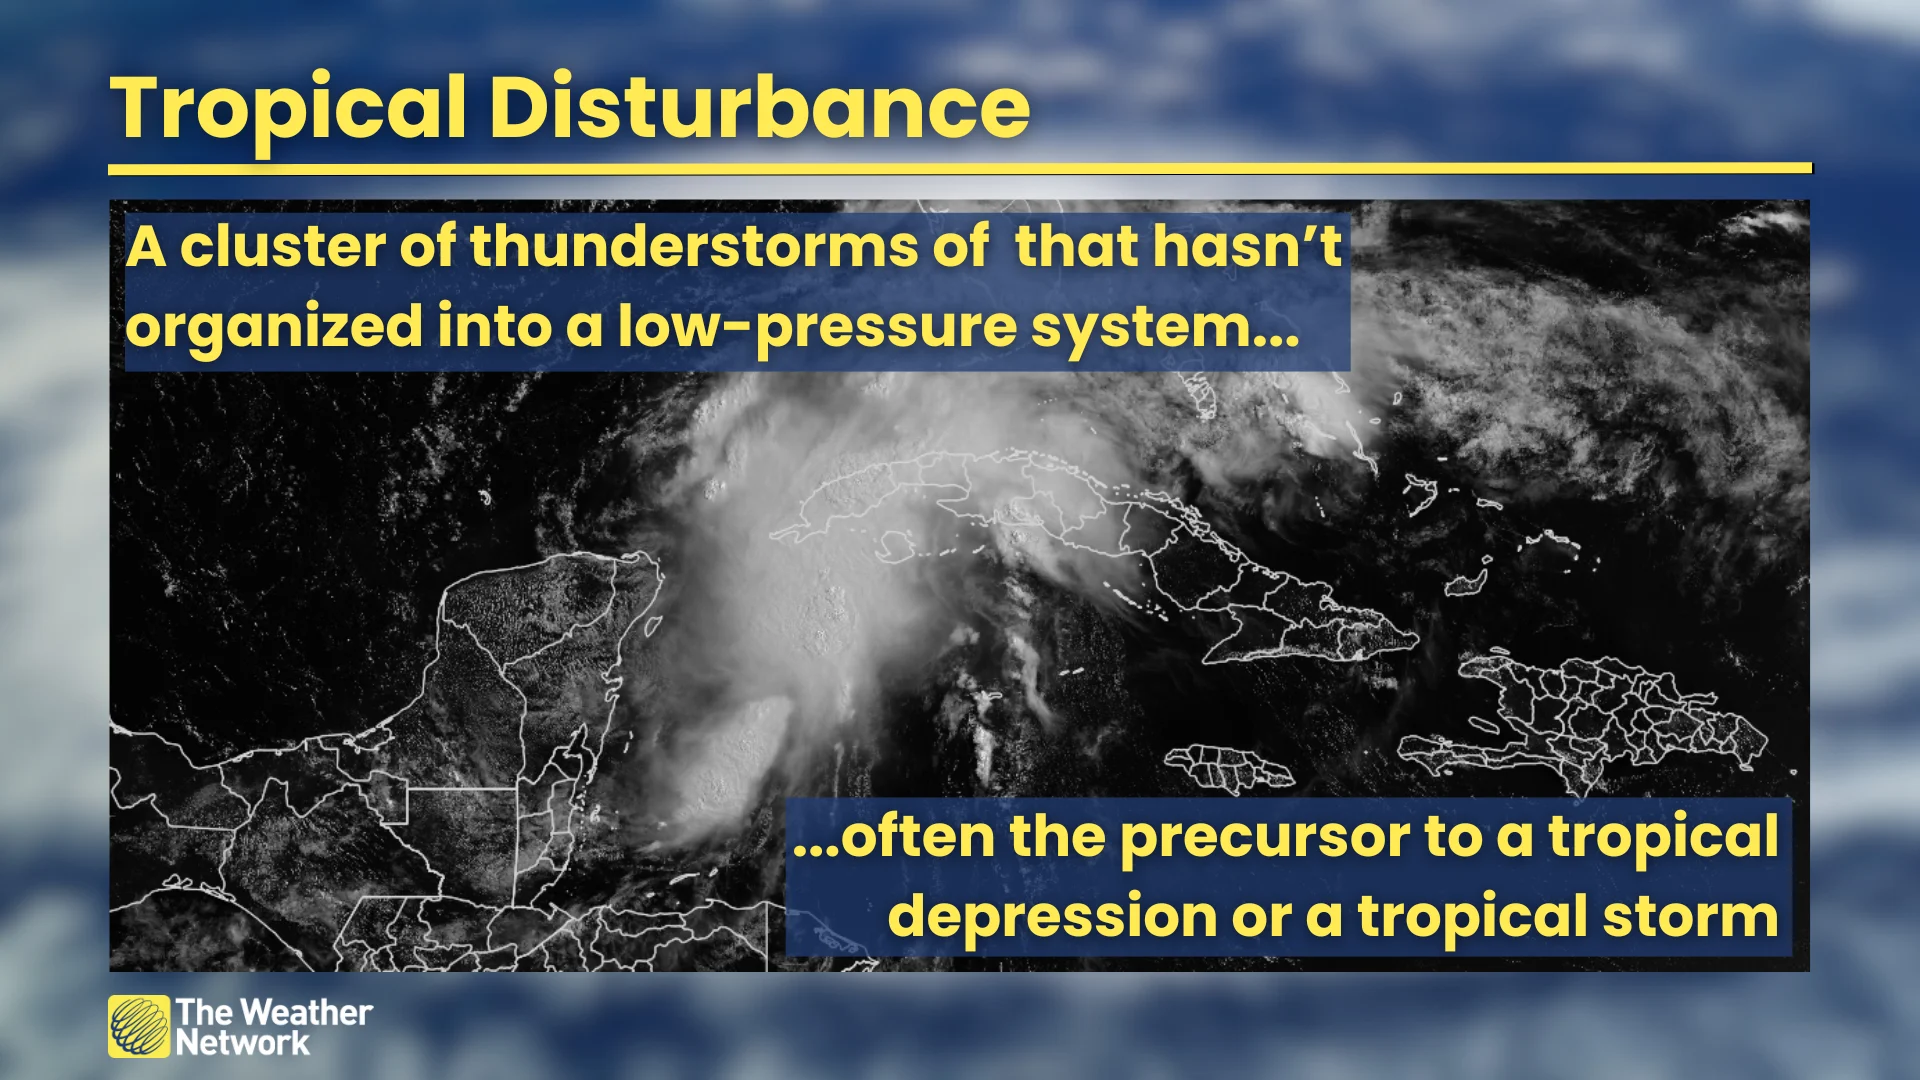 Tropical Disturbance Definition